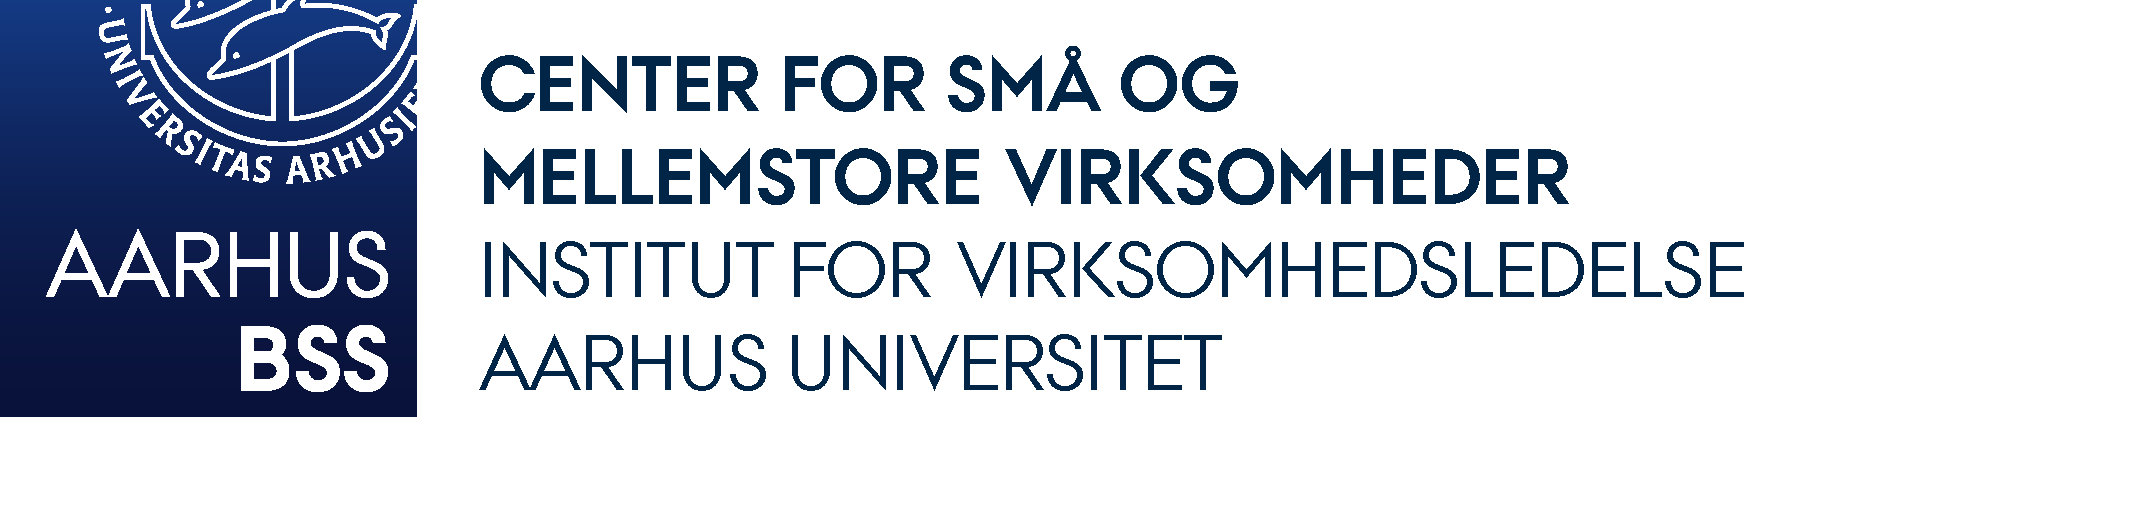 Logo for Center for Små og Mellemstore Virksomheder hos Aarhus BSS